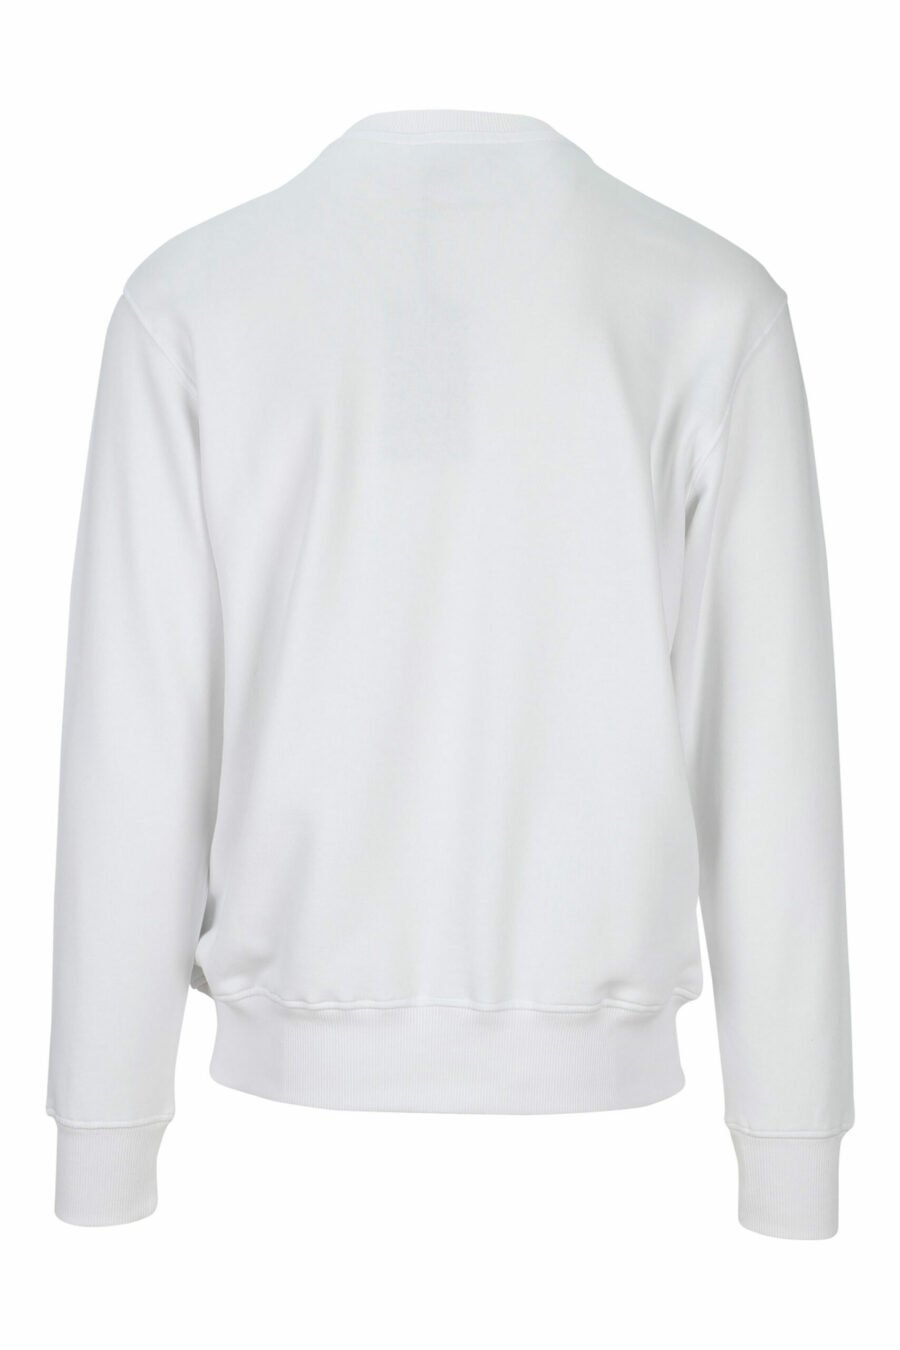 White sweatshirt with "spry" graphic maxilogo - 8052019469769 1 scaled